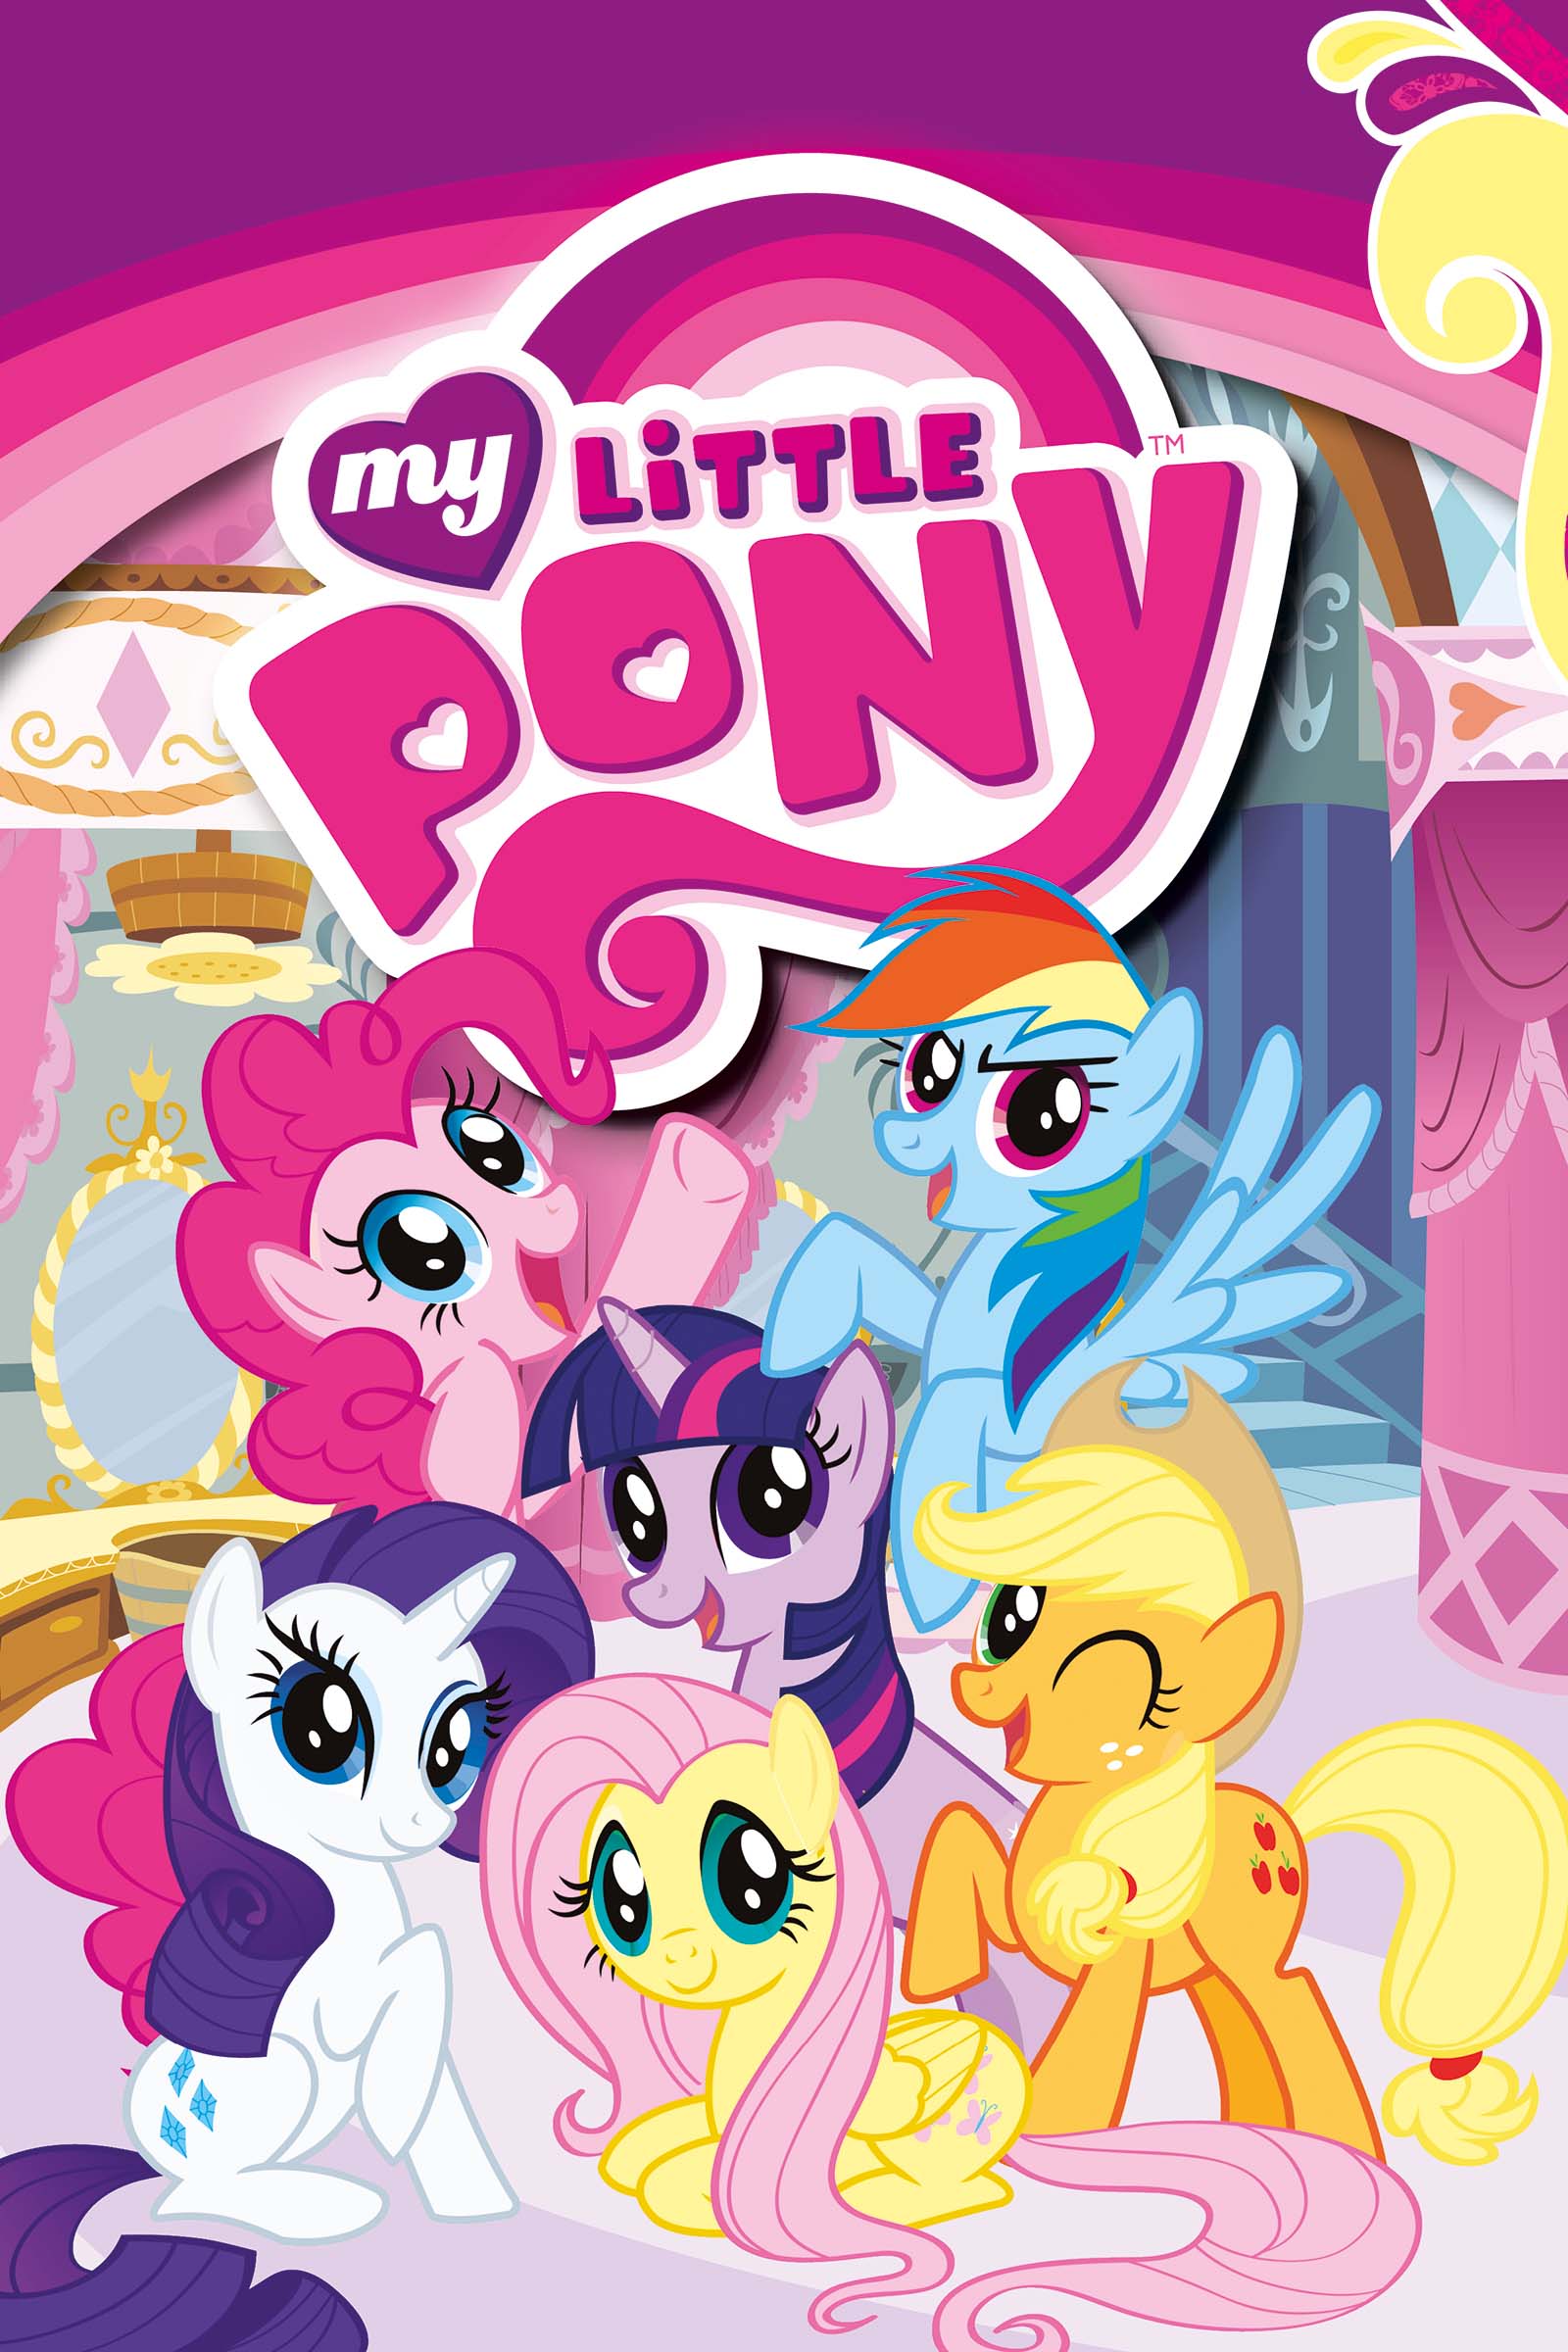 My little pony season 2